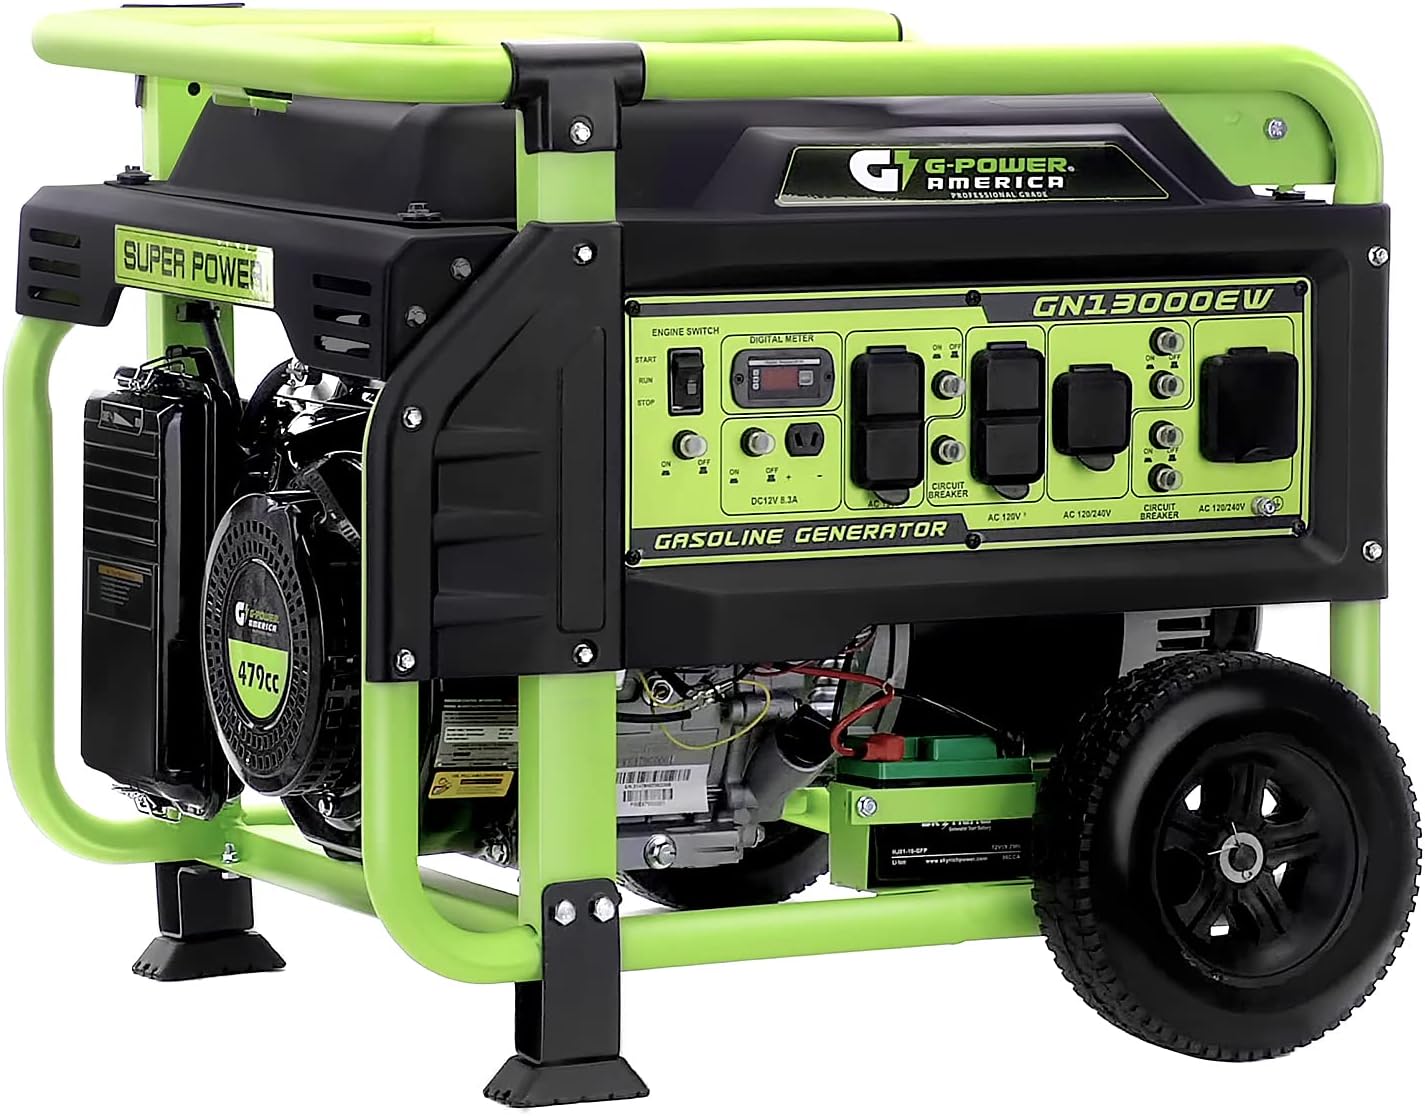 Green-Power America Portable Generator 13000 Watt Review